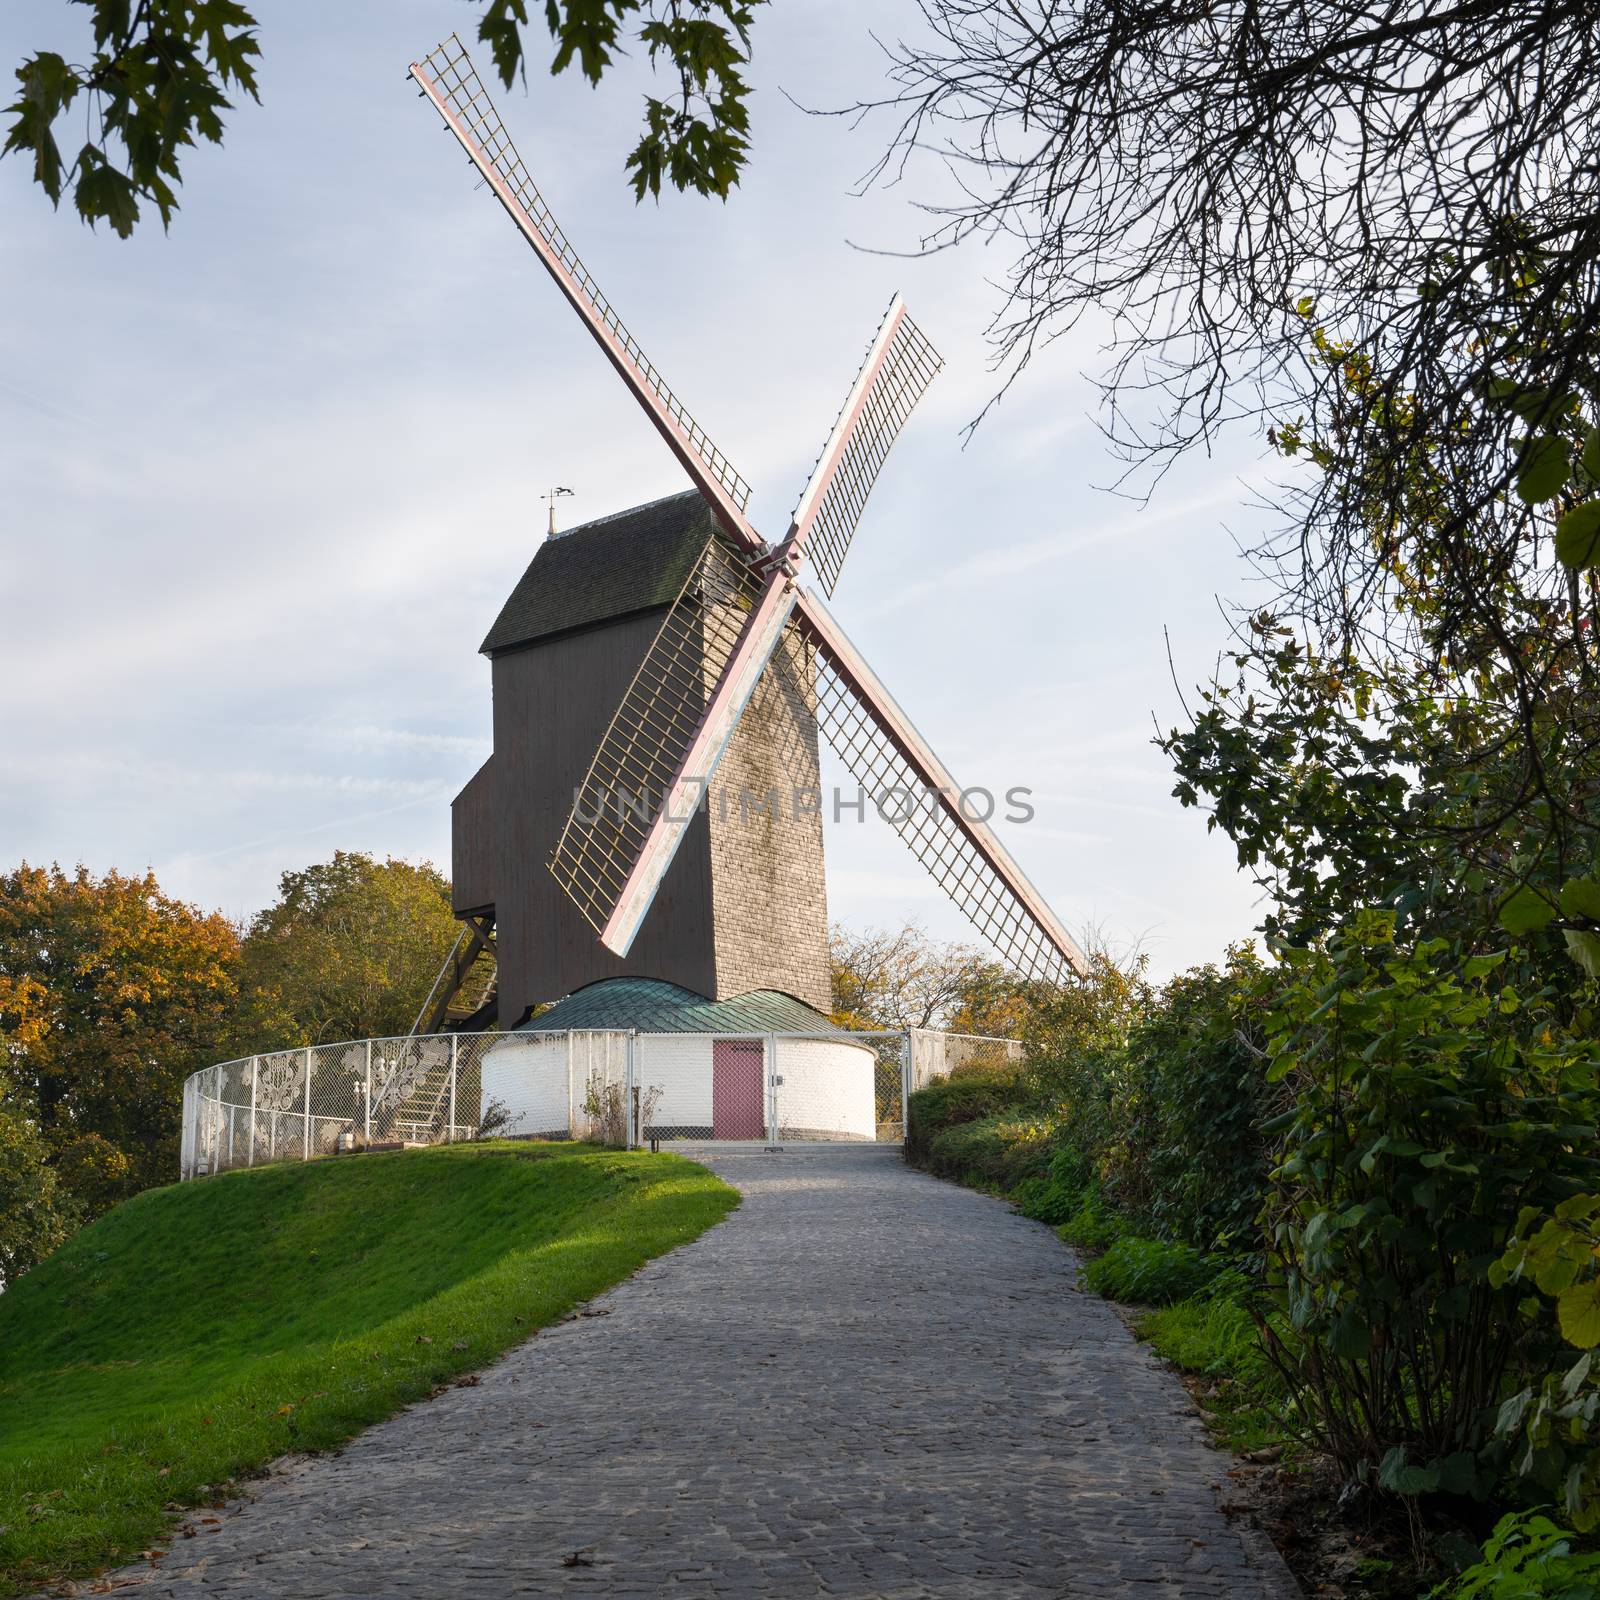 Historic windmill, Bruges, Belgium by alfotokunst